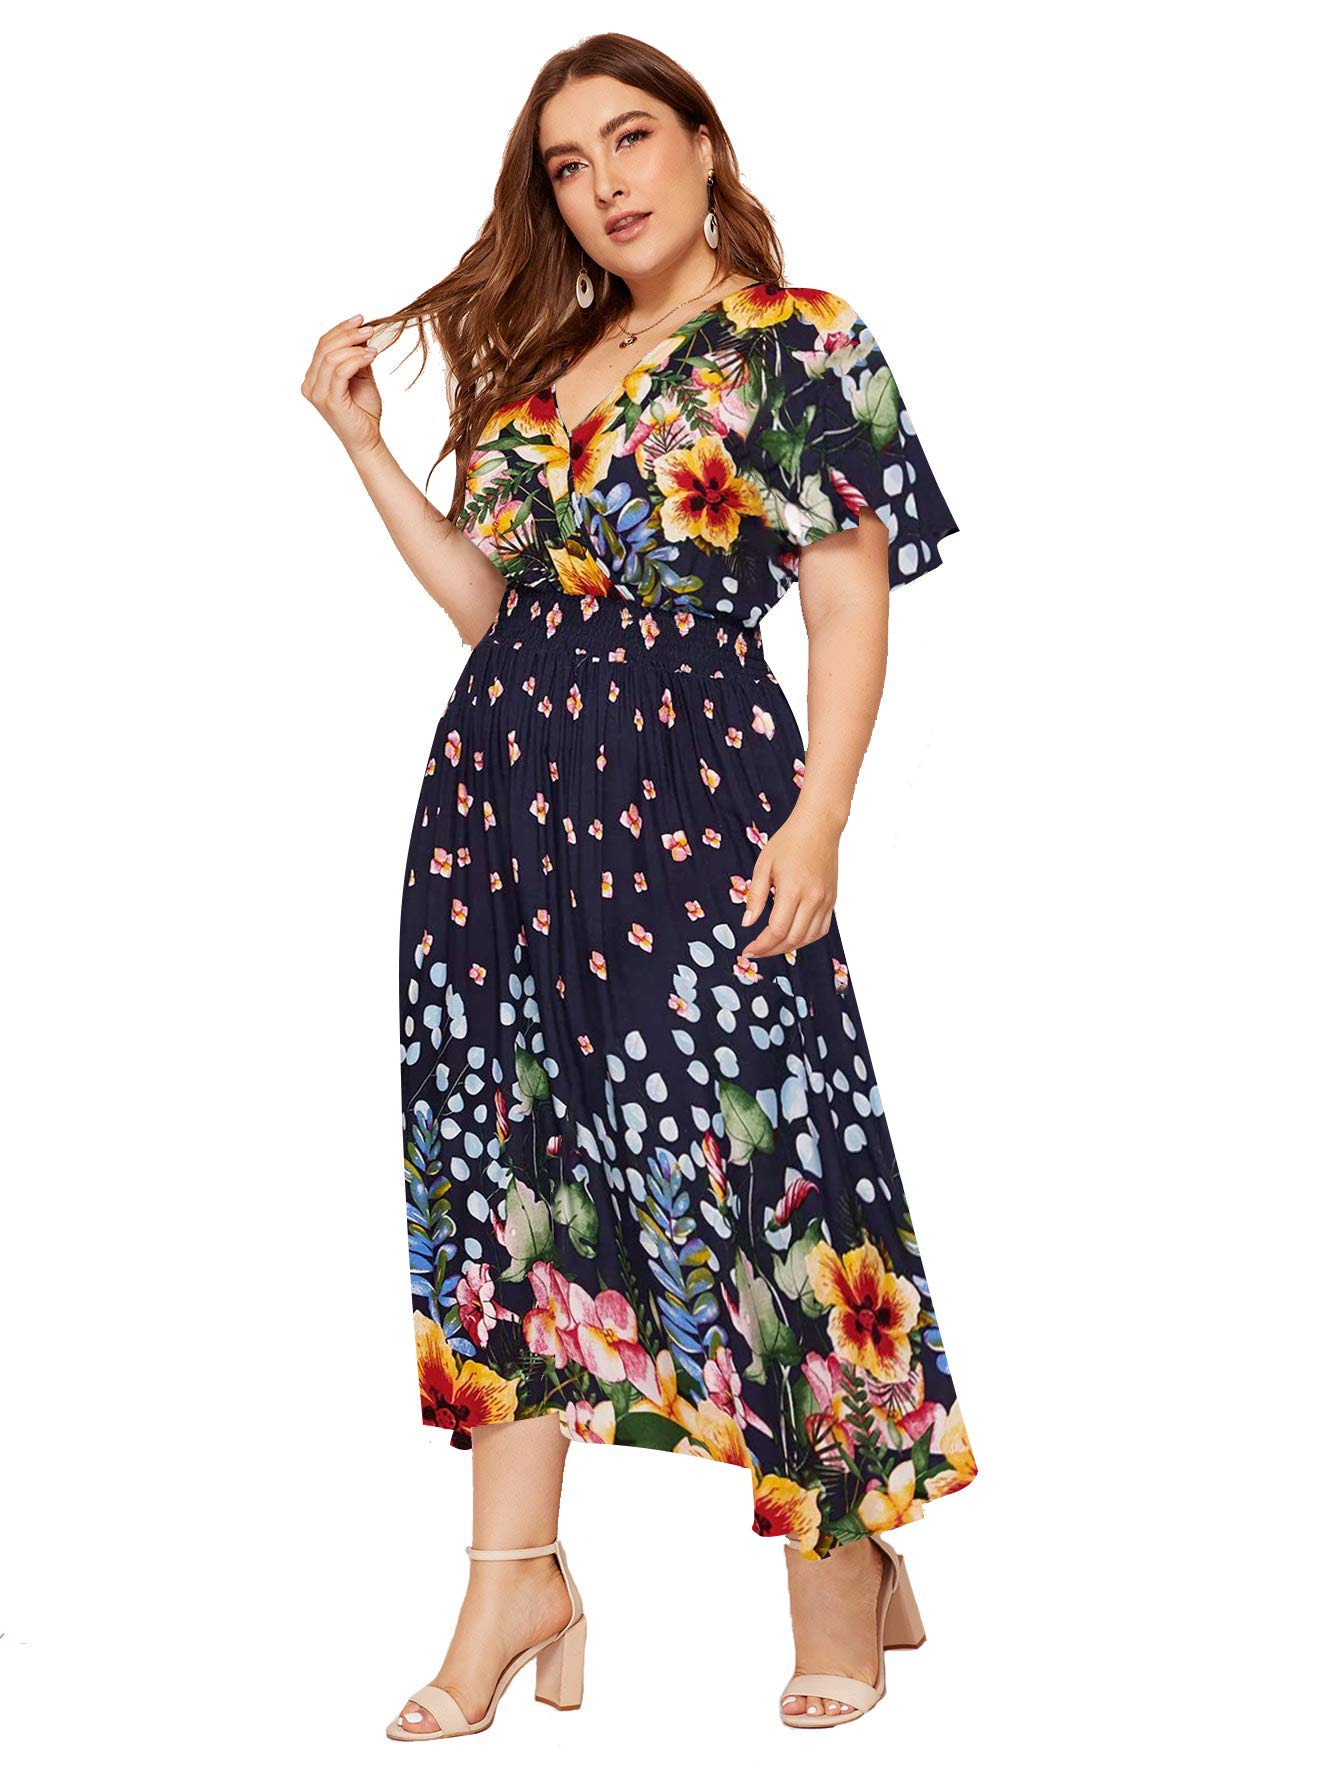 Miluma + Plus Size Summer Floral Boho Dress